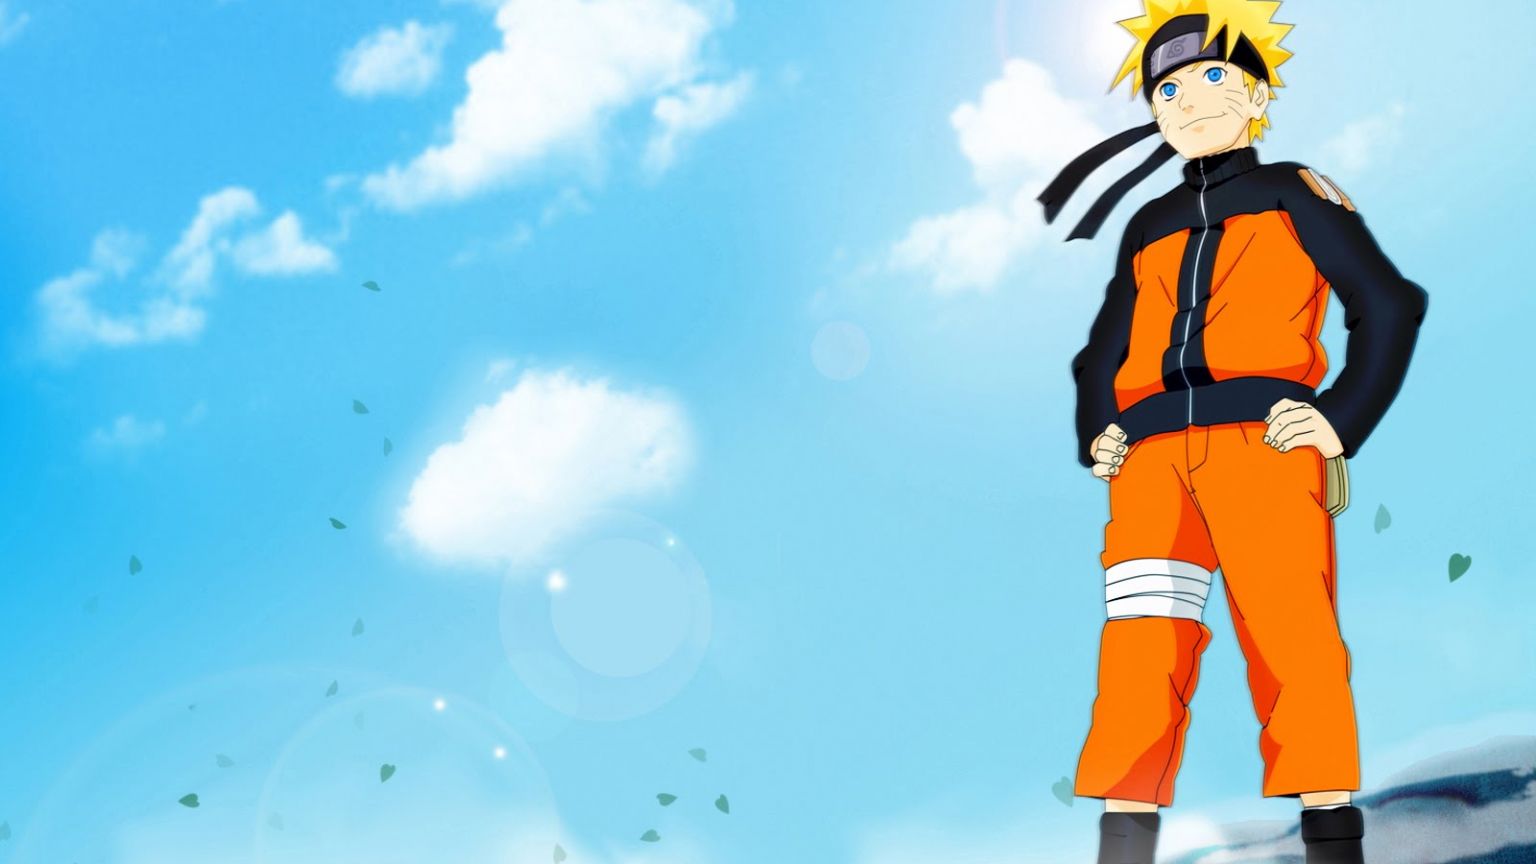 Free download naruto background 150x150 [1600x1200] for your Desktop, Mobile & Tablet. Explore Naruto Background. Naruto And Sasuke Wallpaper, Naruto Wallpaper Hd